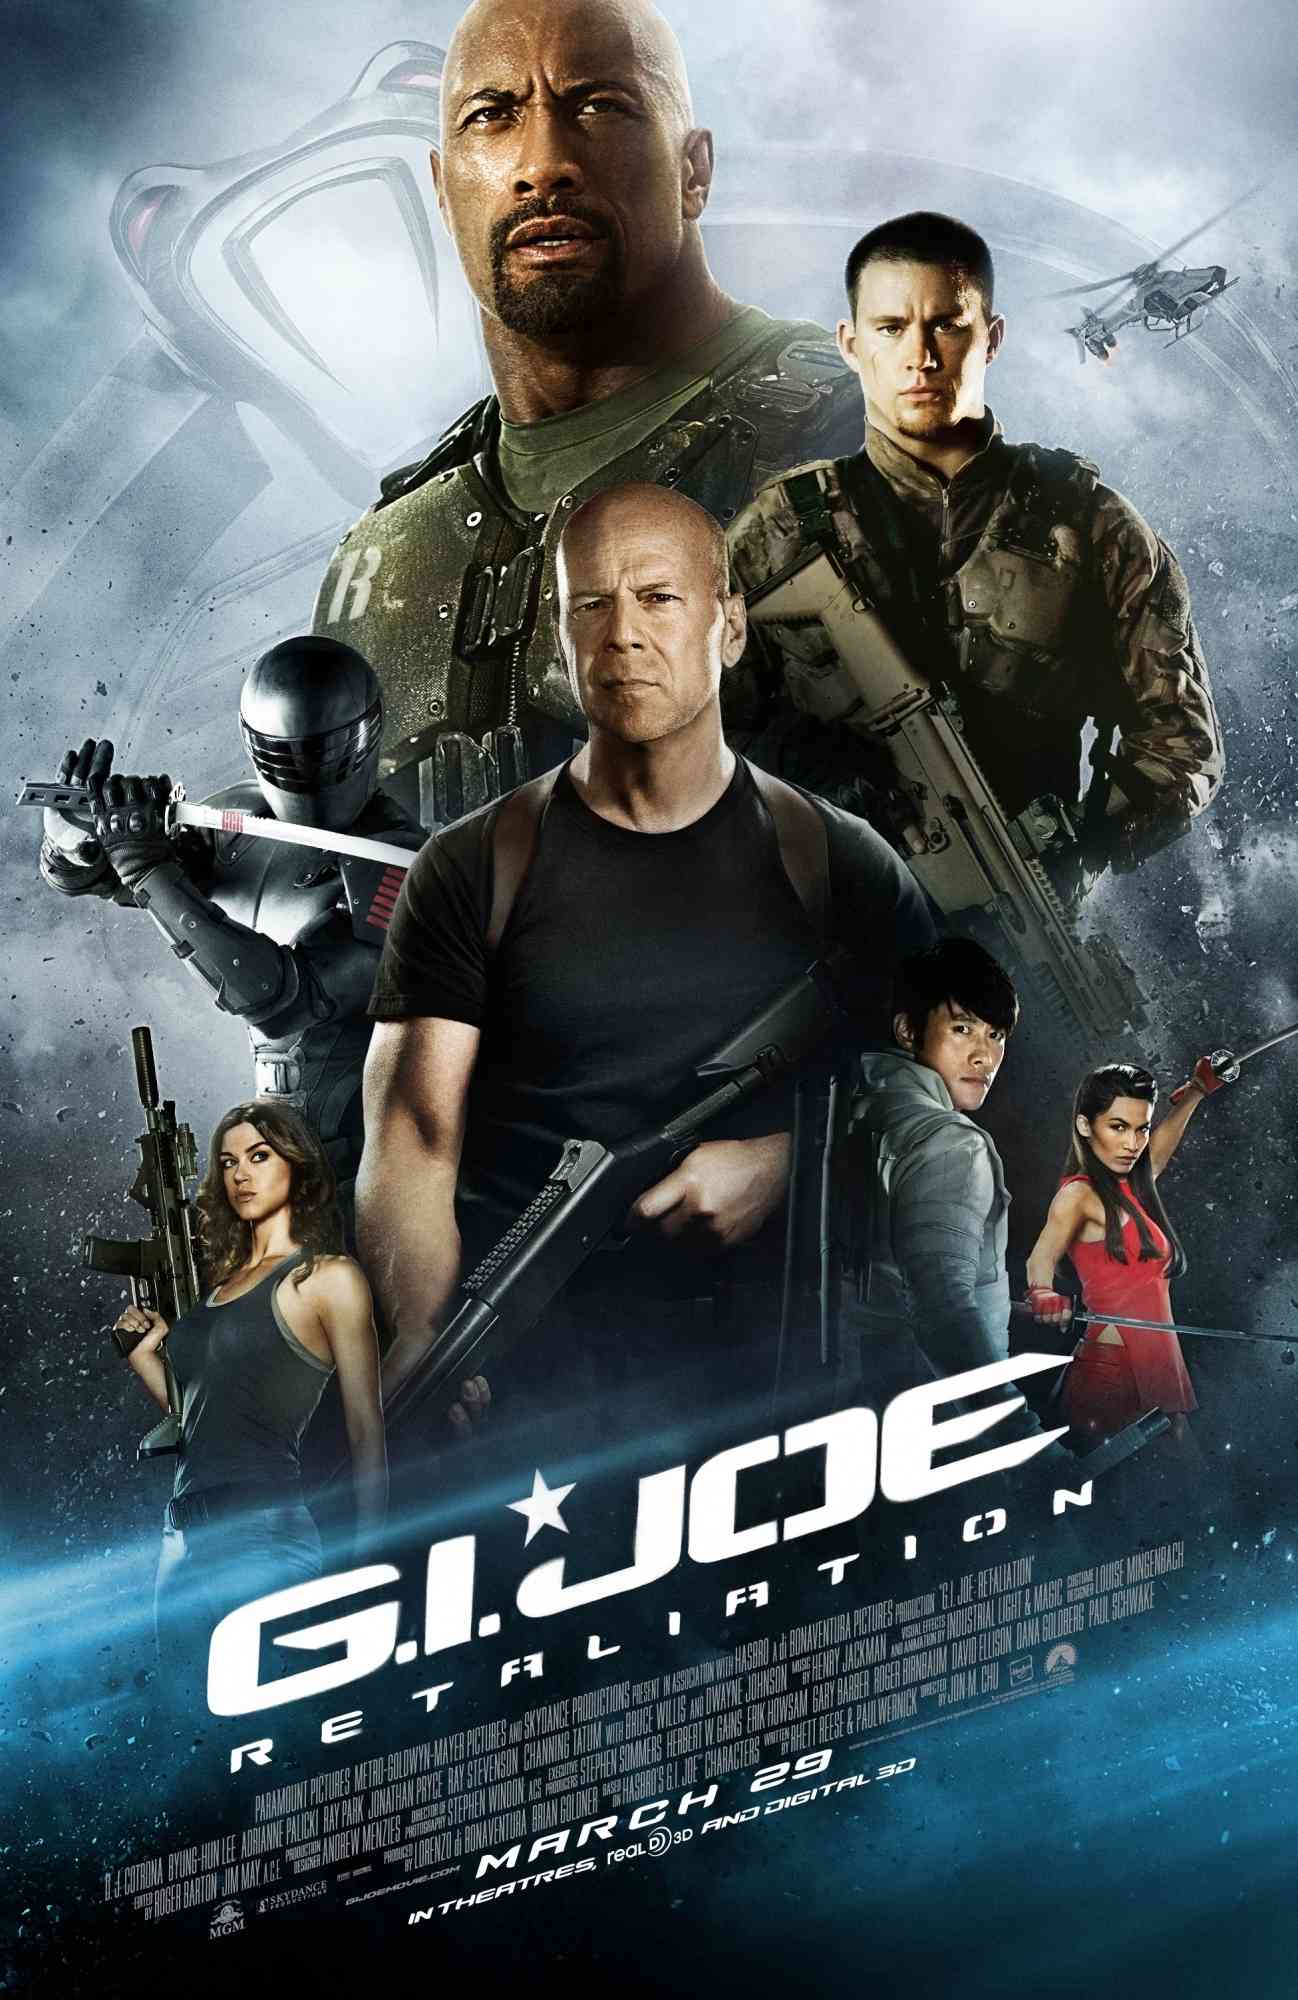 FULL MOVIE: G.I Joe: Retaliation (2013)